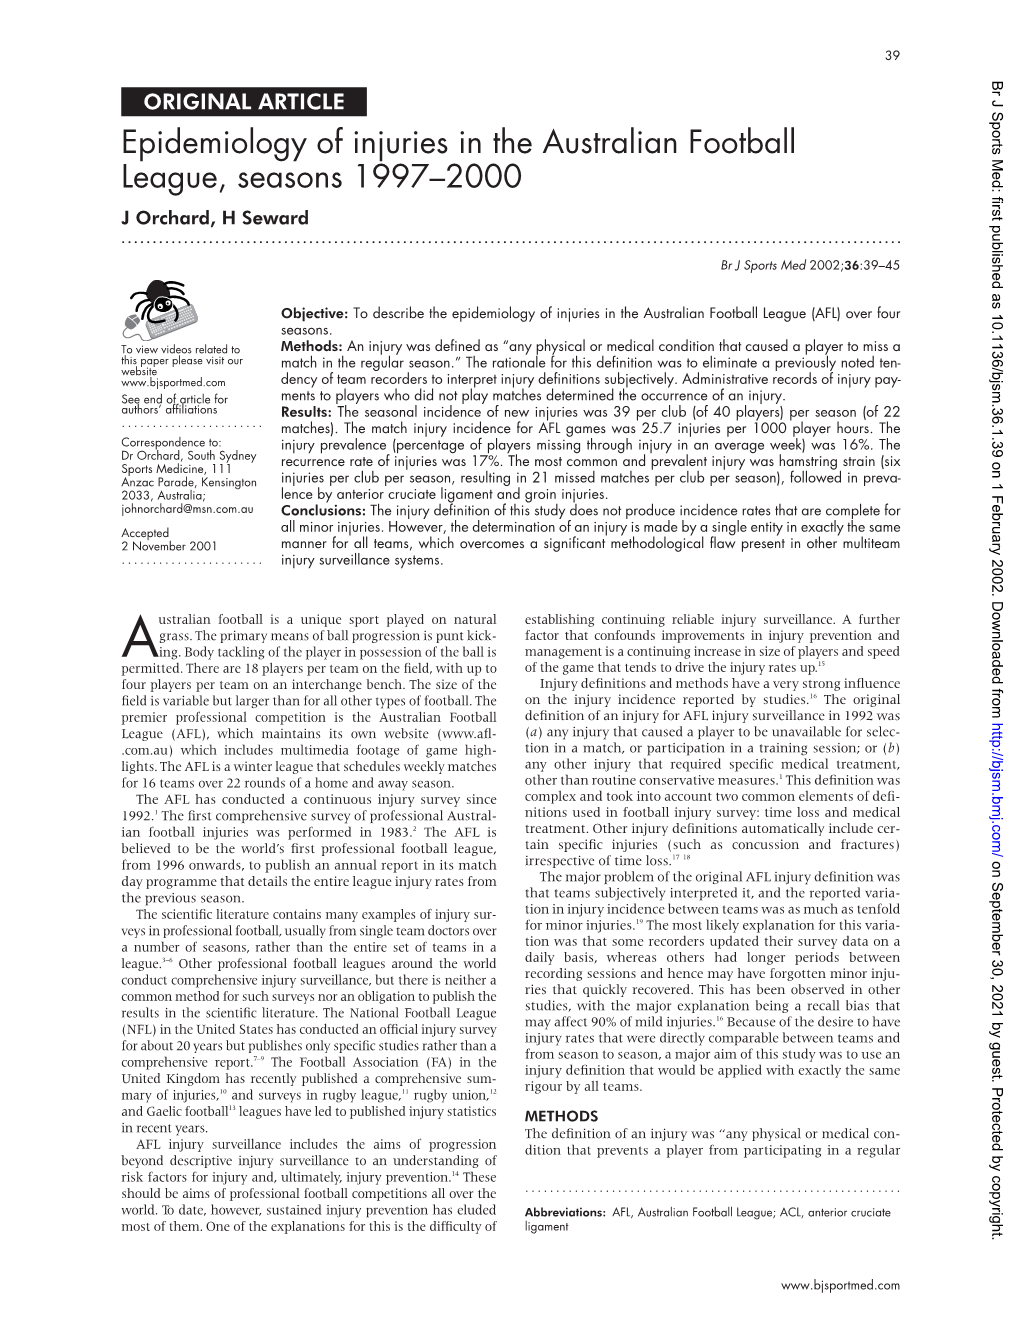 Epidemiology of Injuries in the Australian Football League, Seasons 1997–2000 J Orchard, H Seward